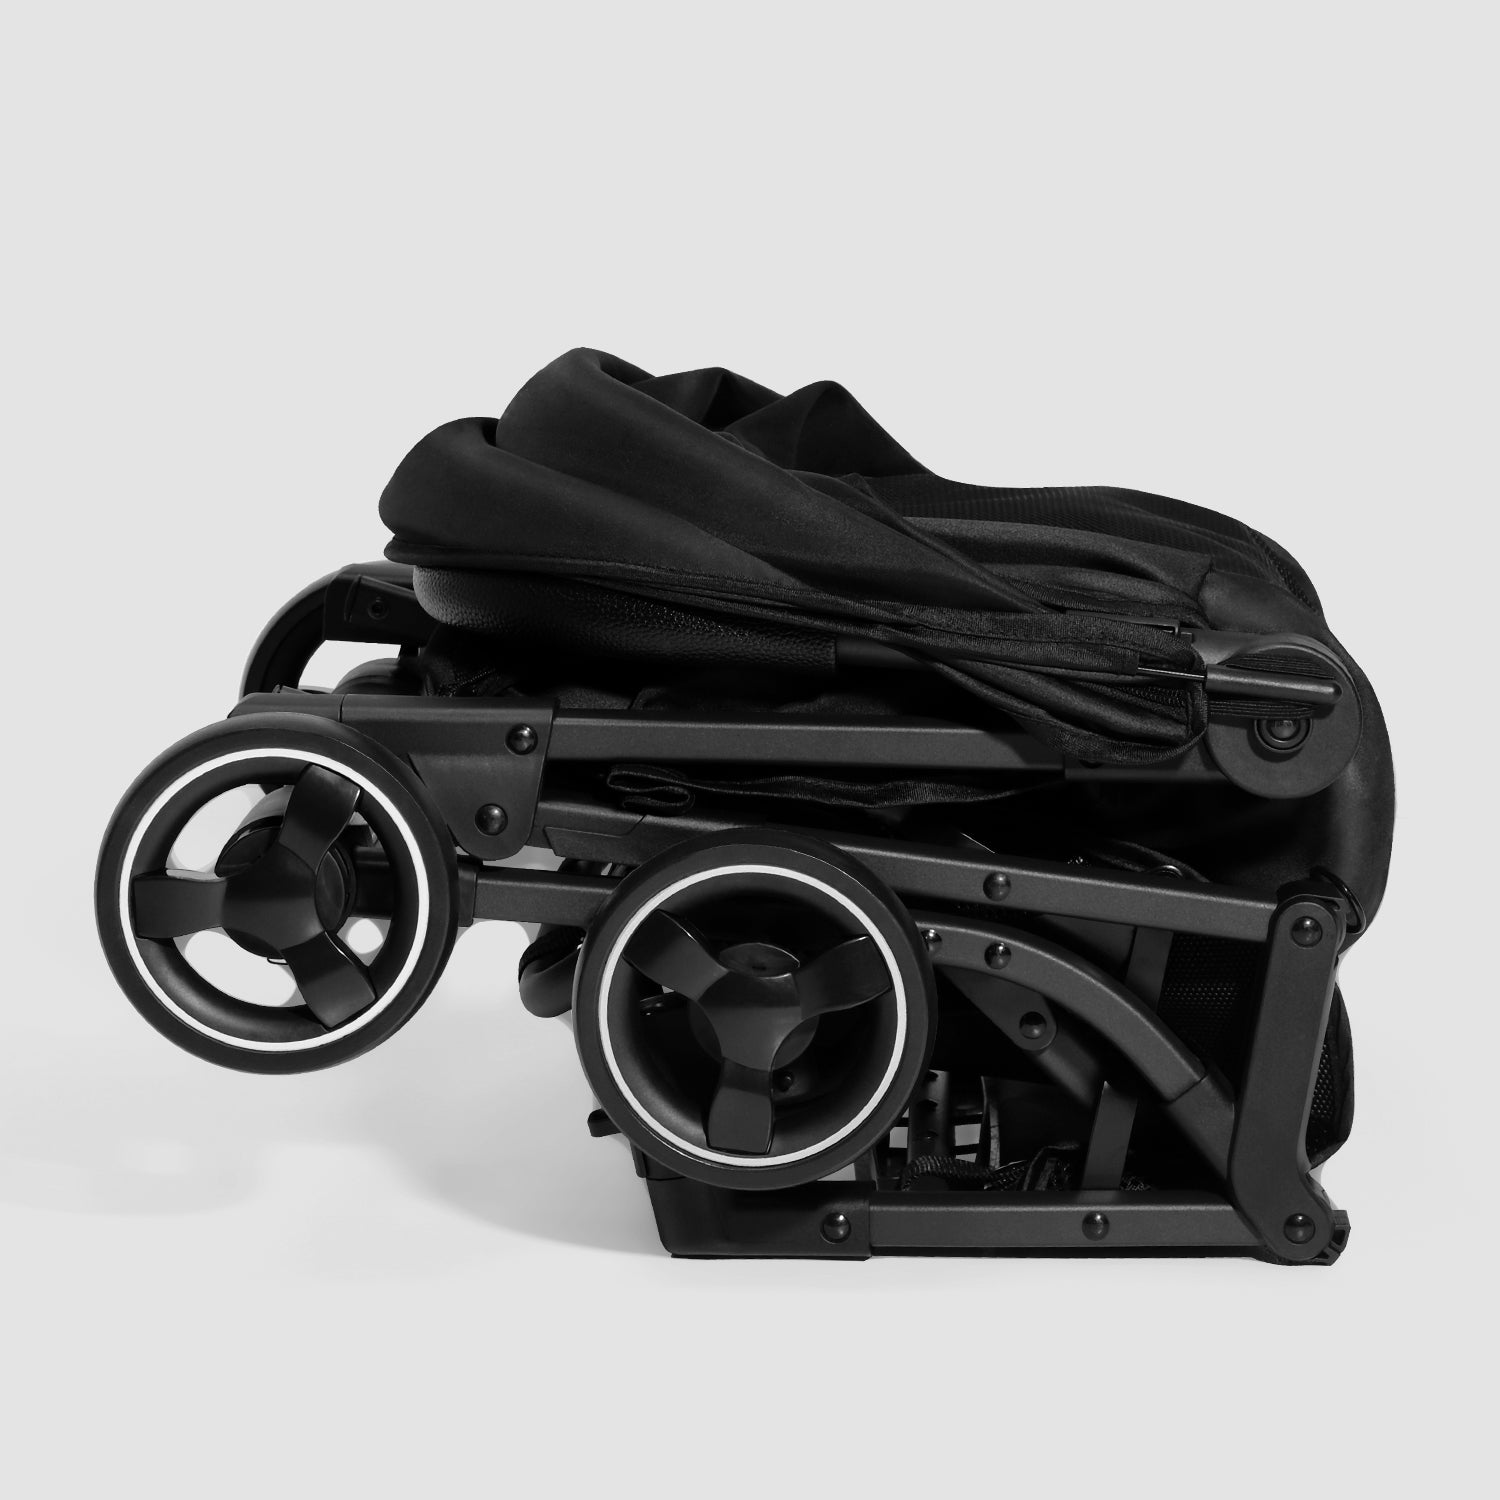 HARPPA Ringo | Ultra Compact Lightweight Travel Stroller